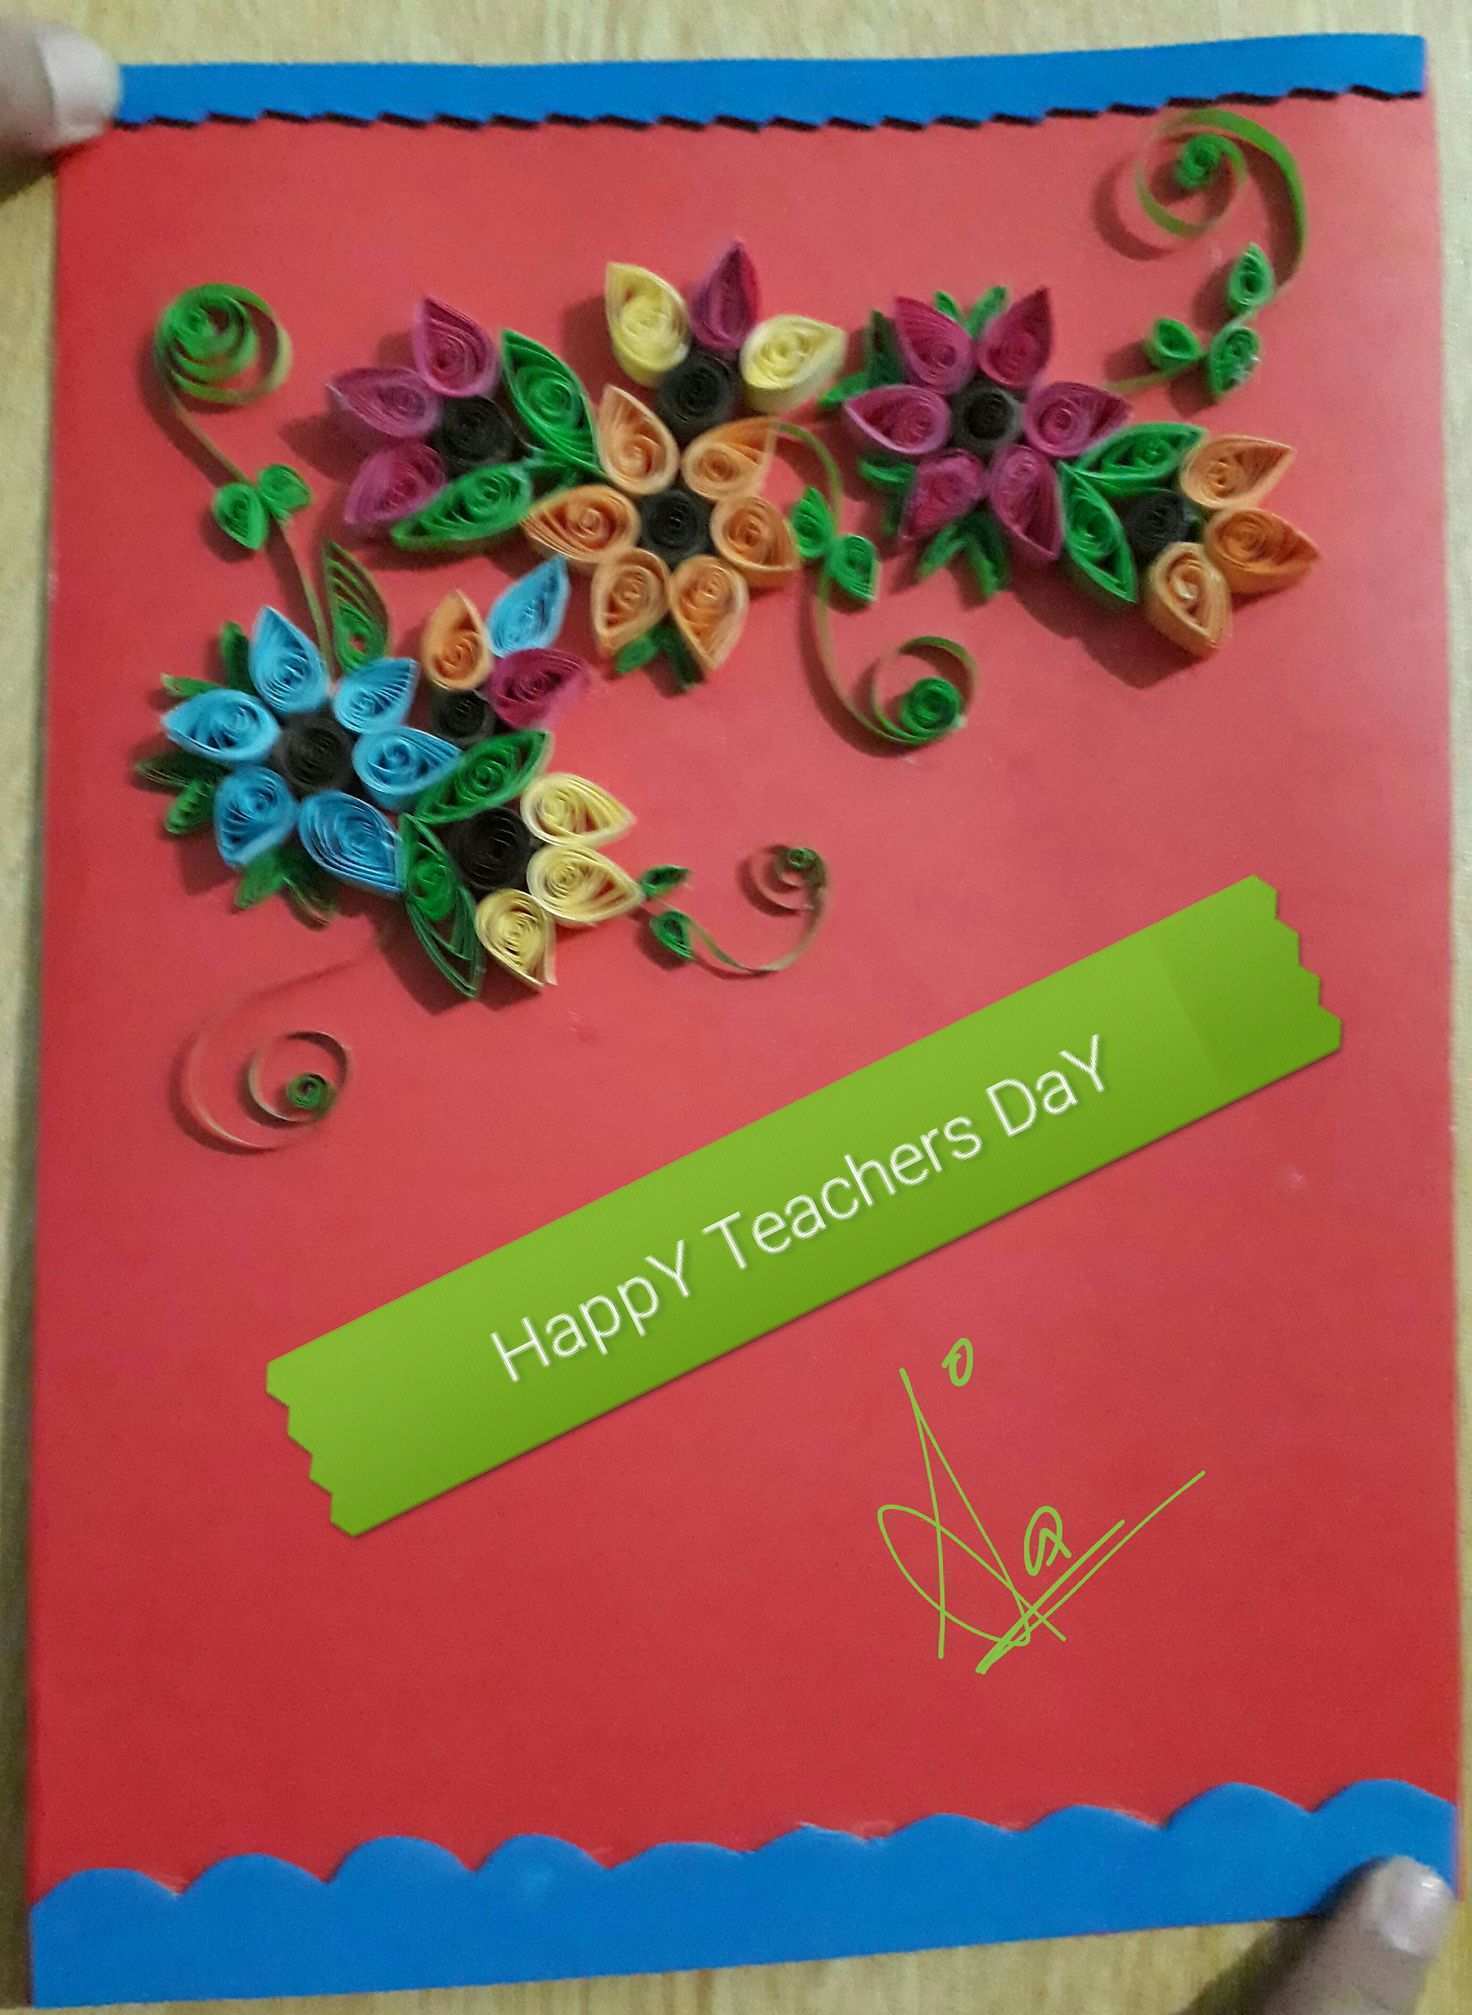 13 Customize Card Template For Teachers Day Maker by Card Template For Teachers Day